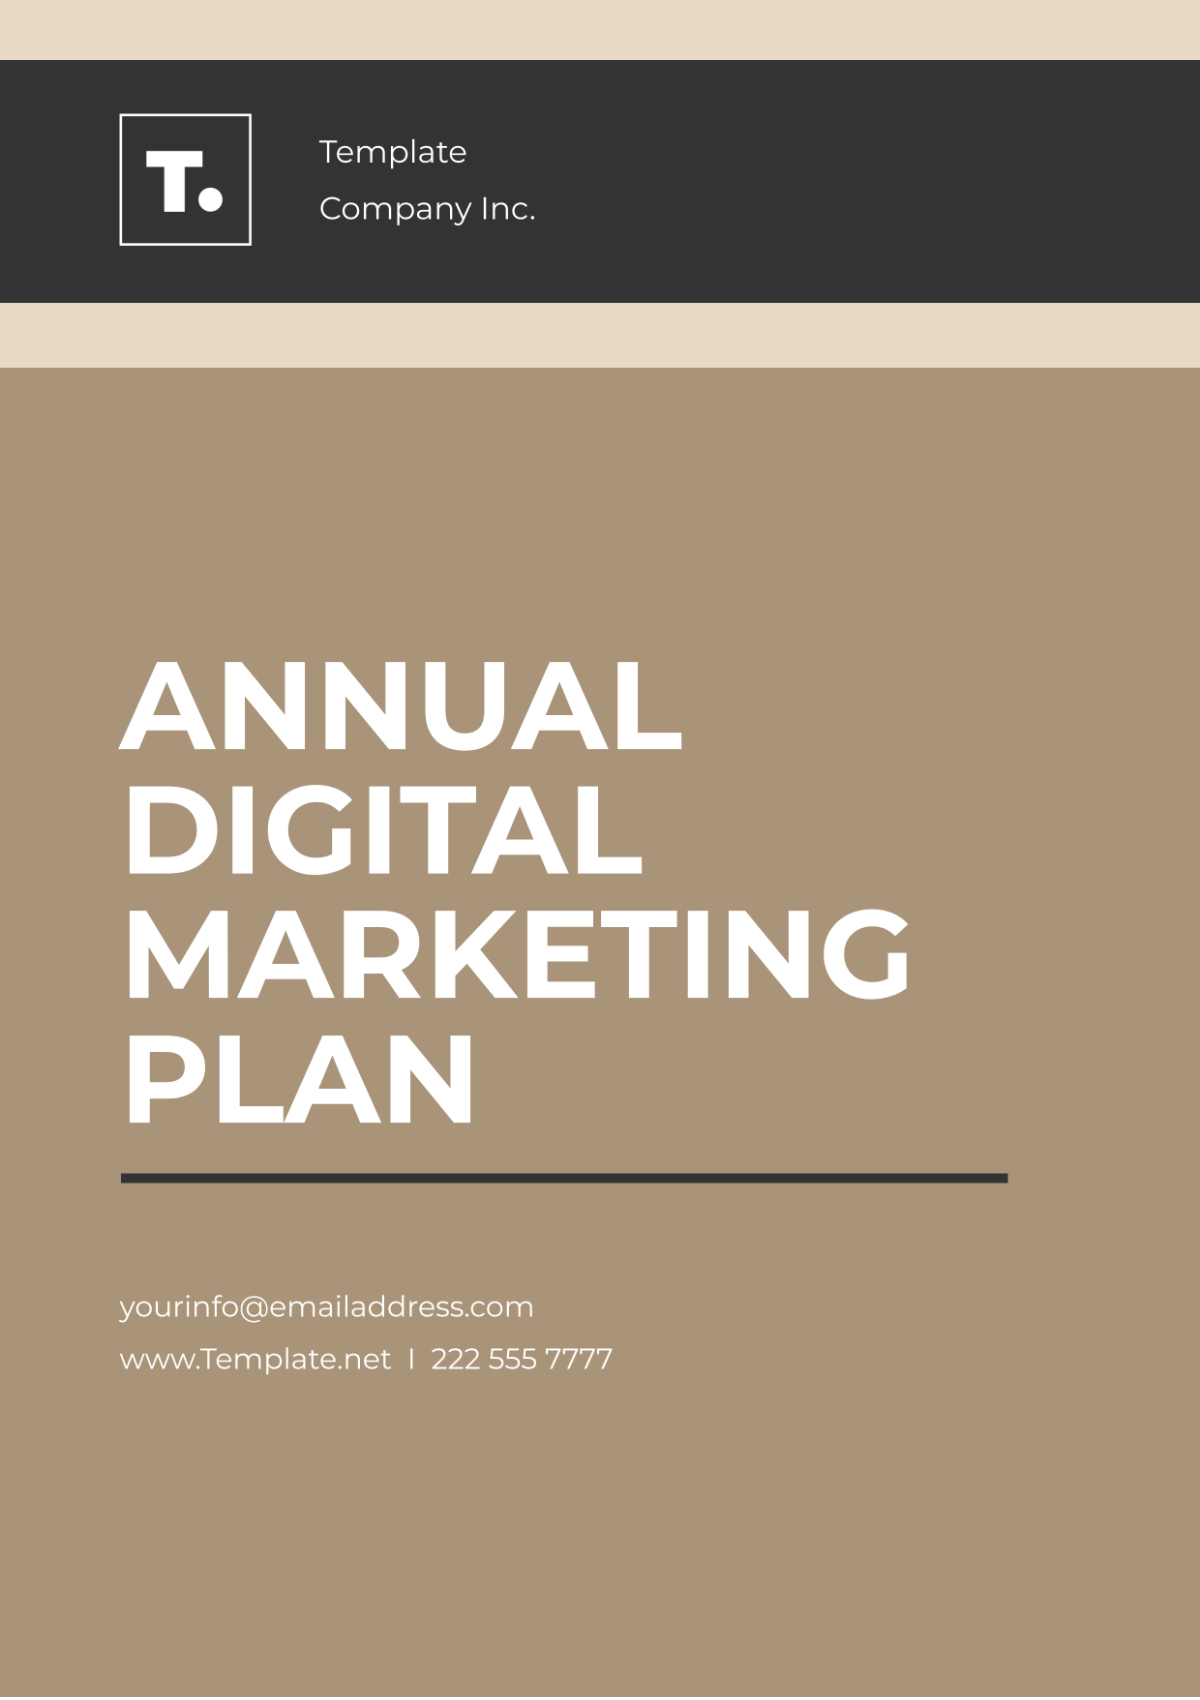 Free Annual Digital Marketing Plan Template